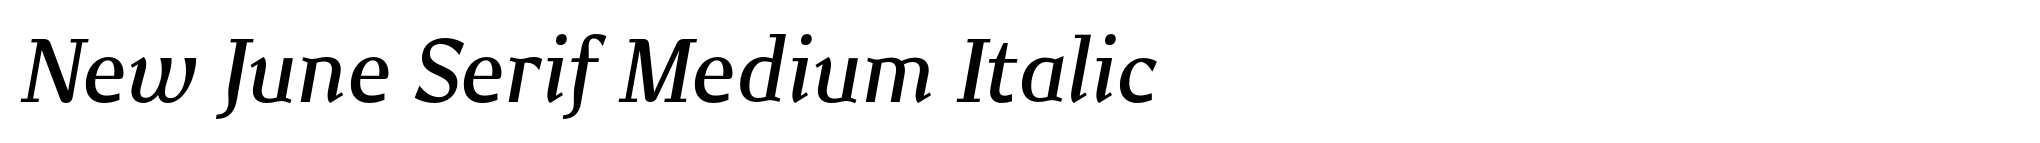 New June Serif Medium Italic image